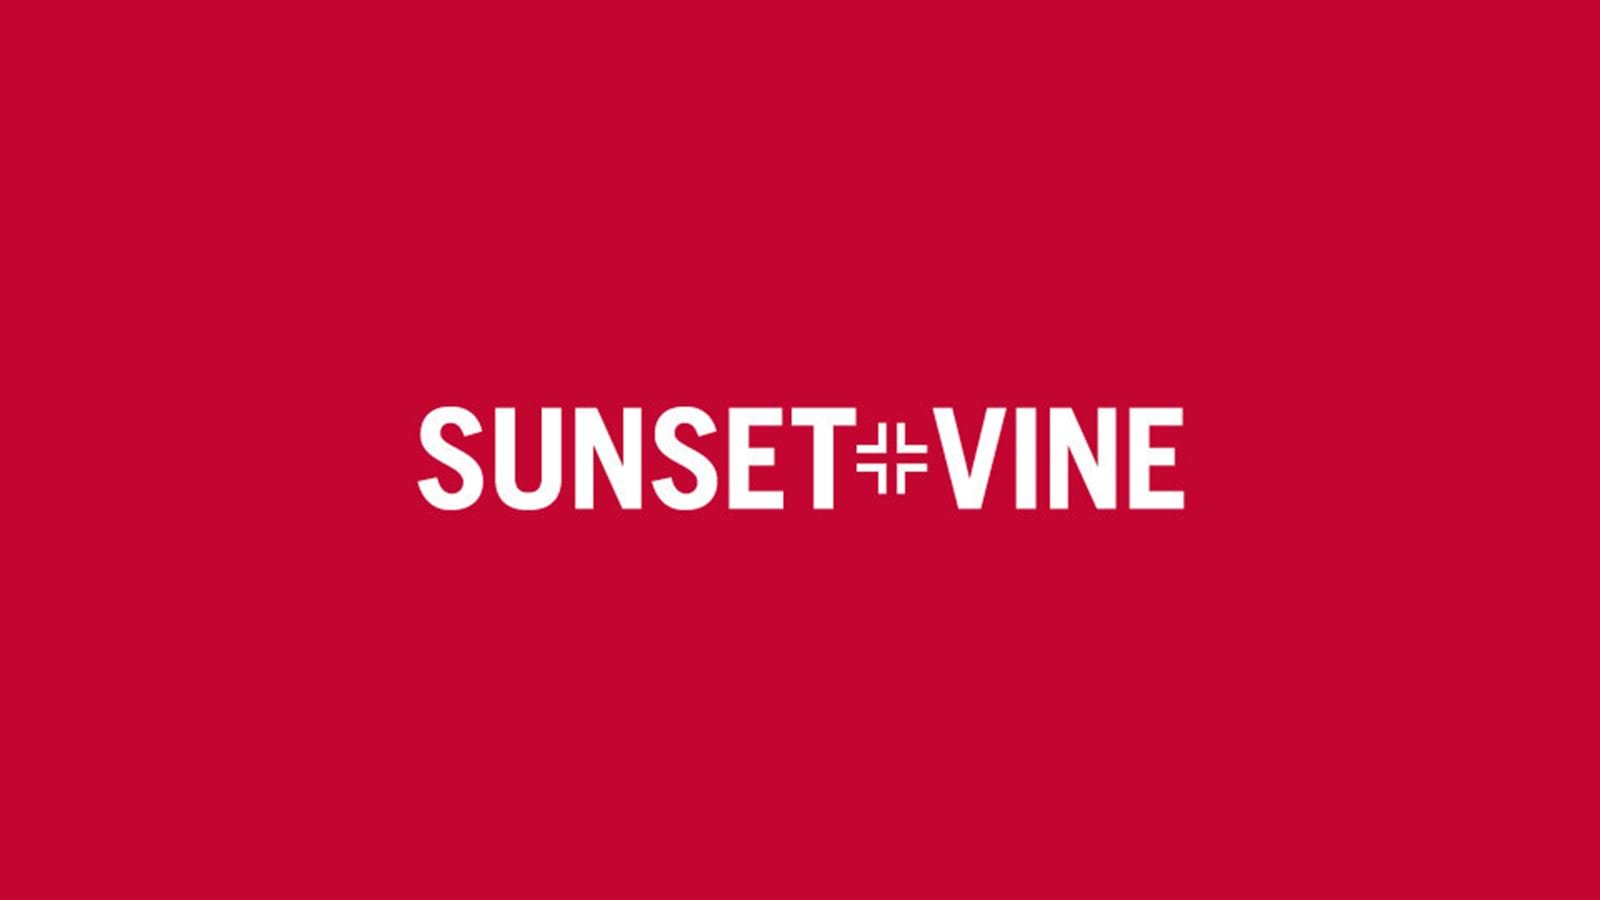 Sunset+Vine wins Most Innovative Sports Broadcast Award